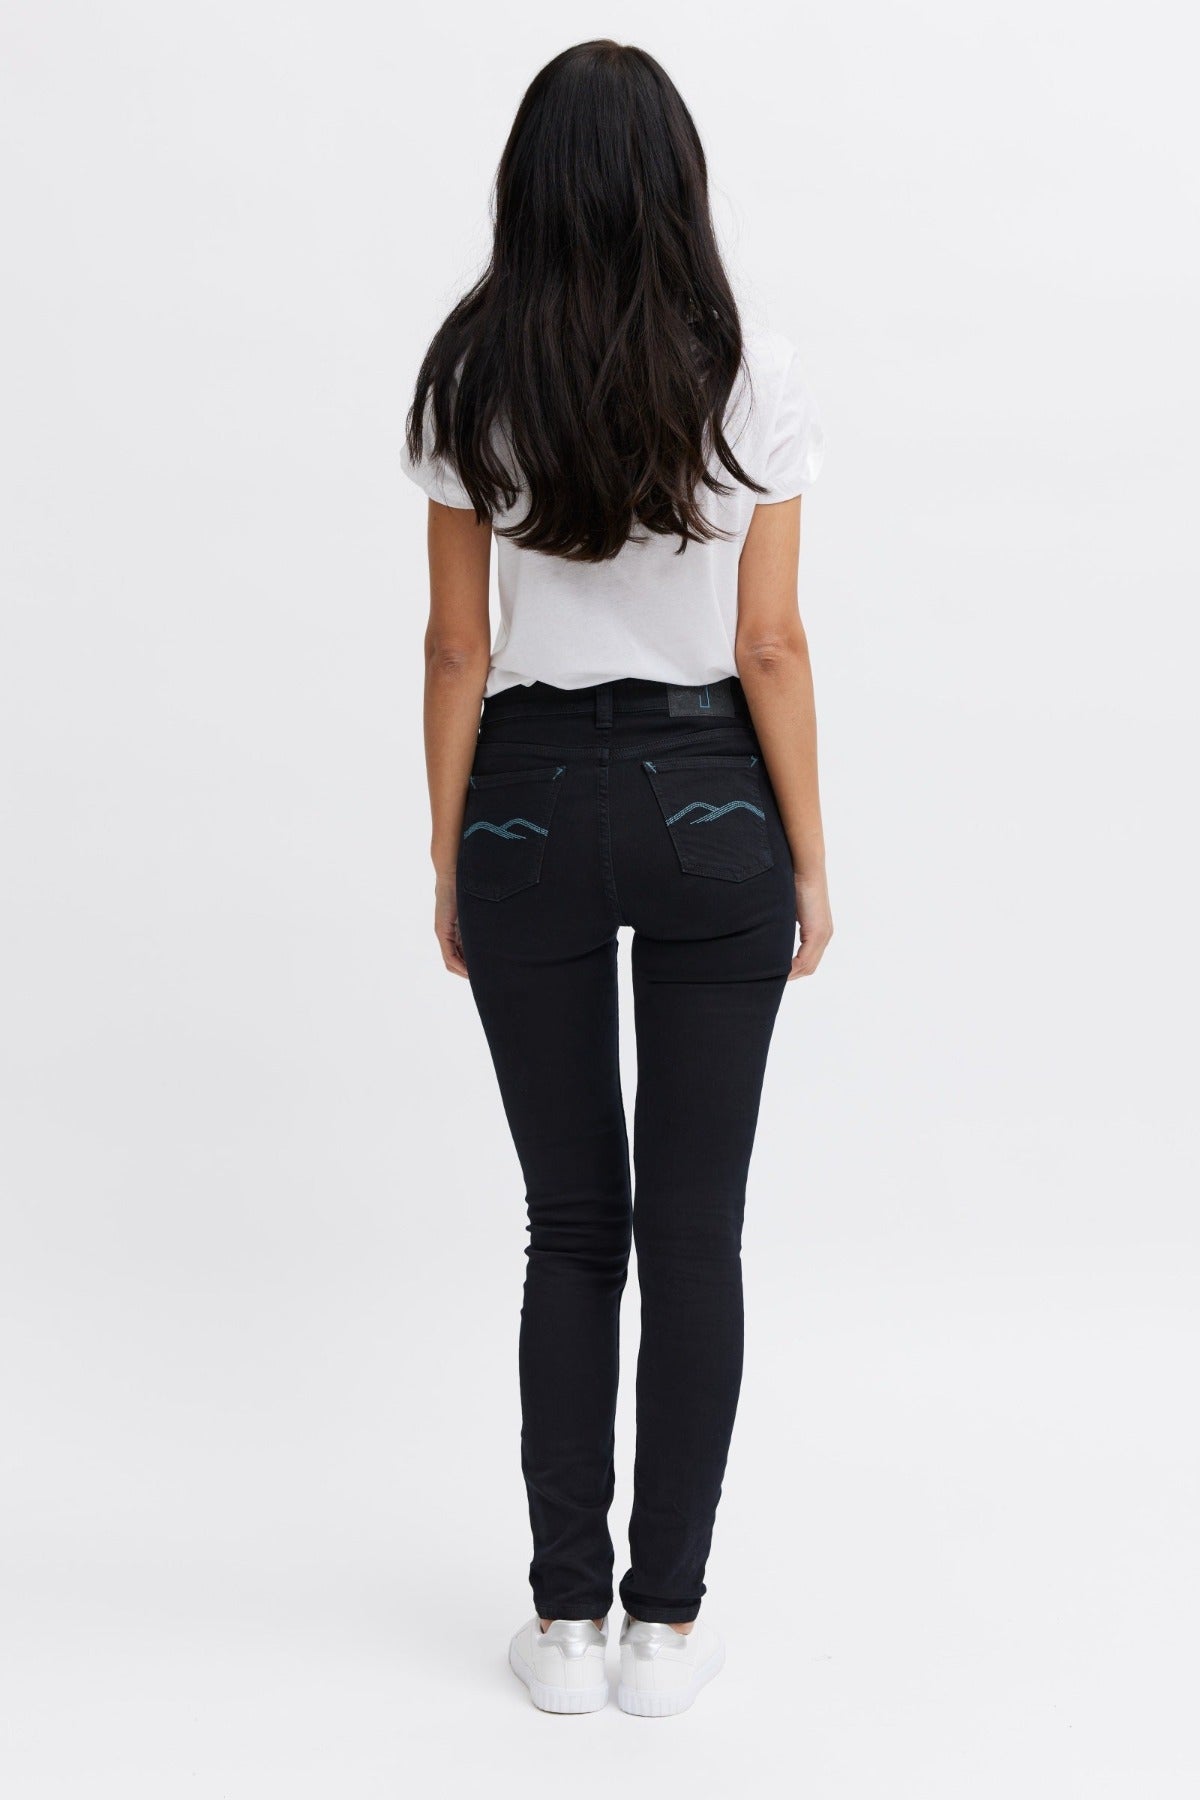 Comfy black jeans for women